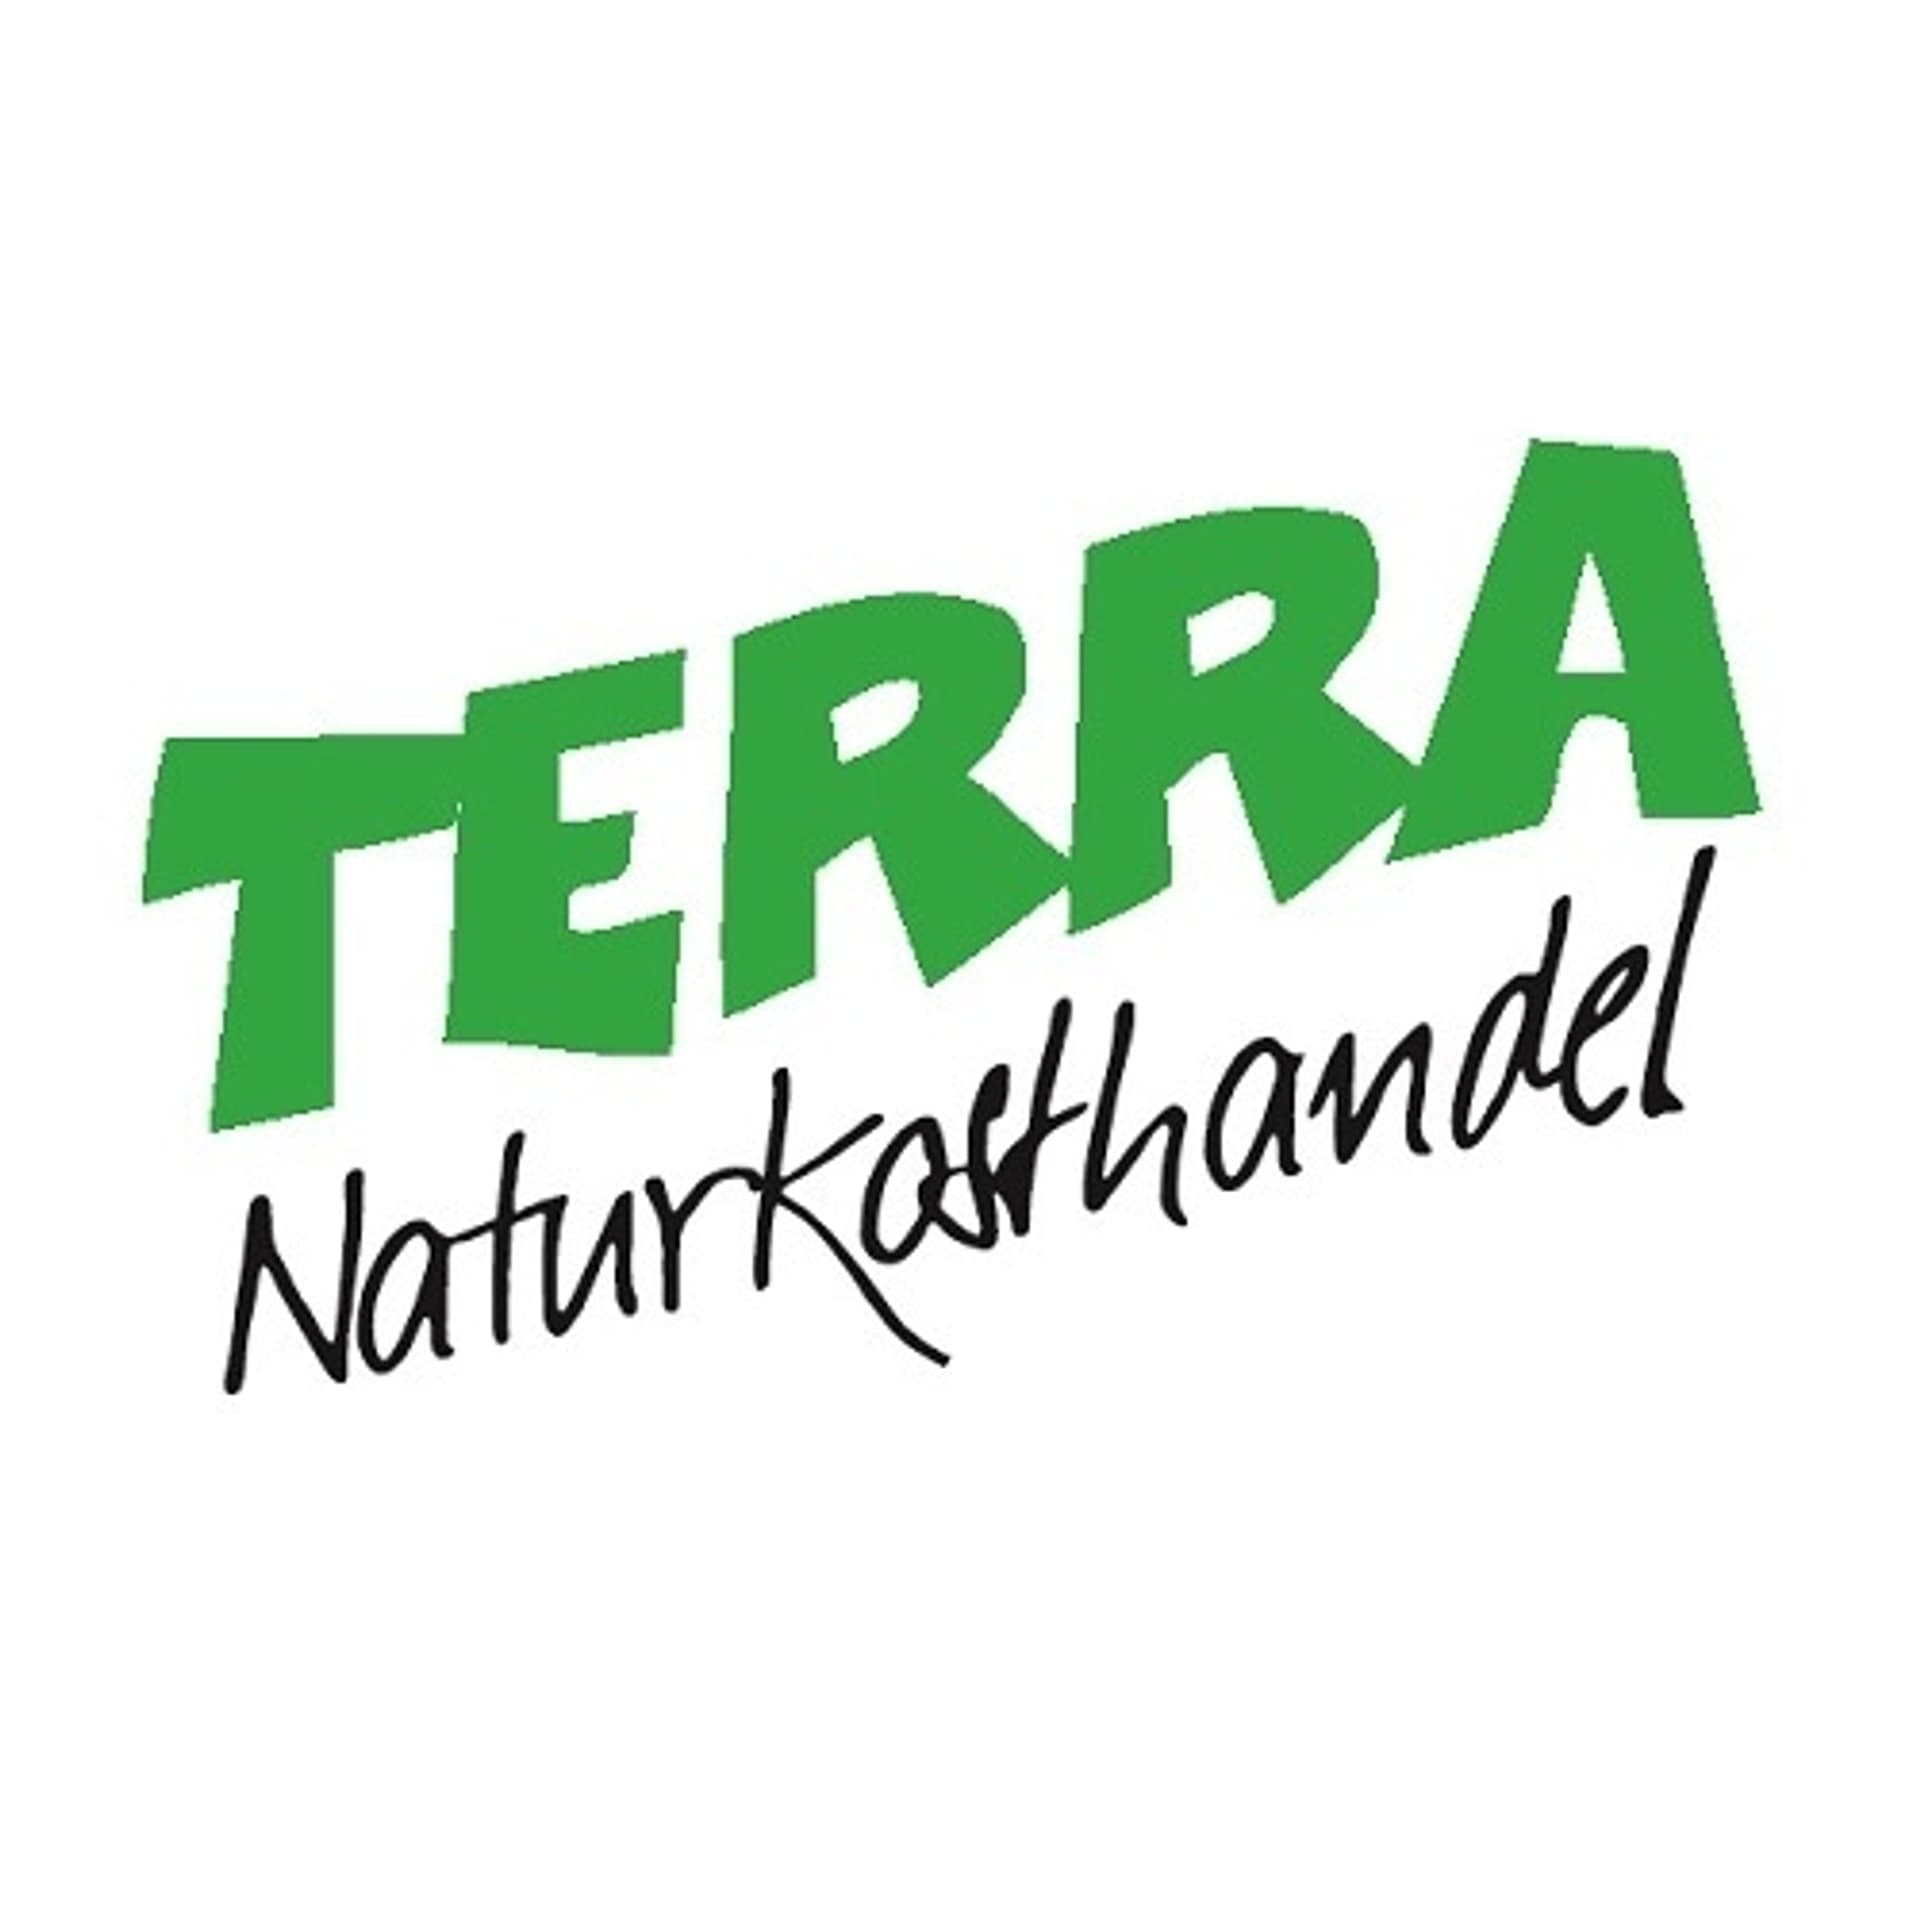 Terra Naturkost Logo